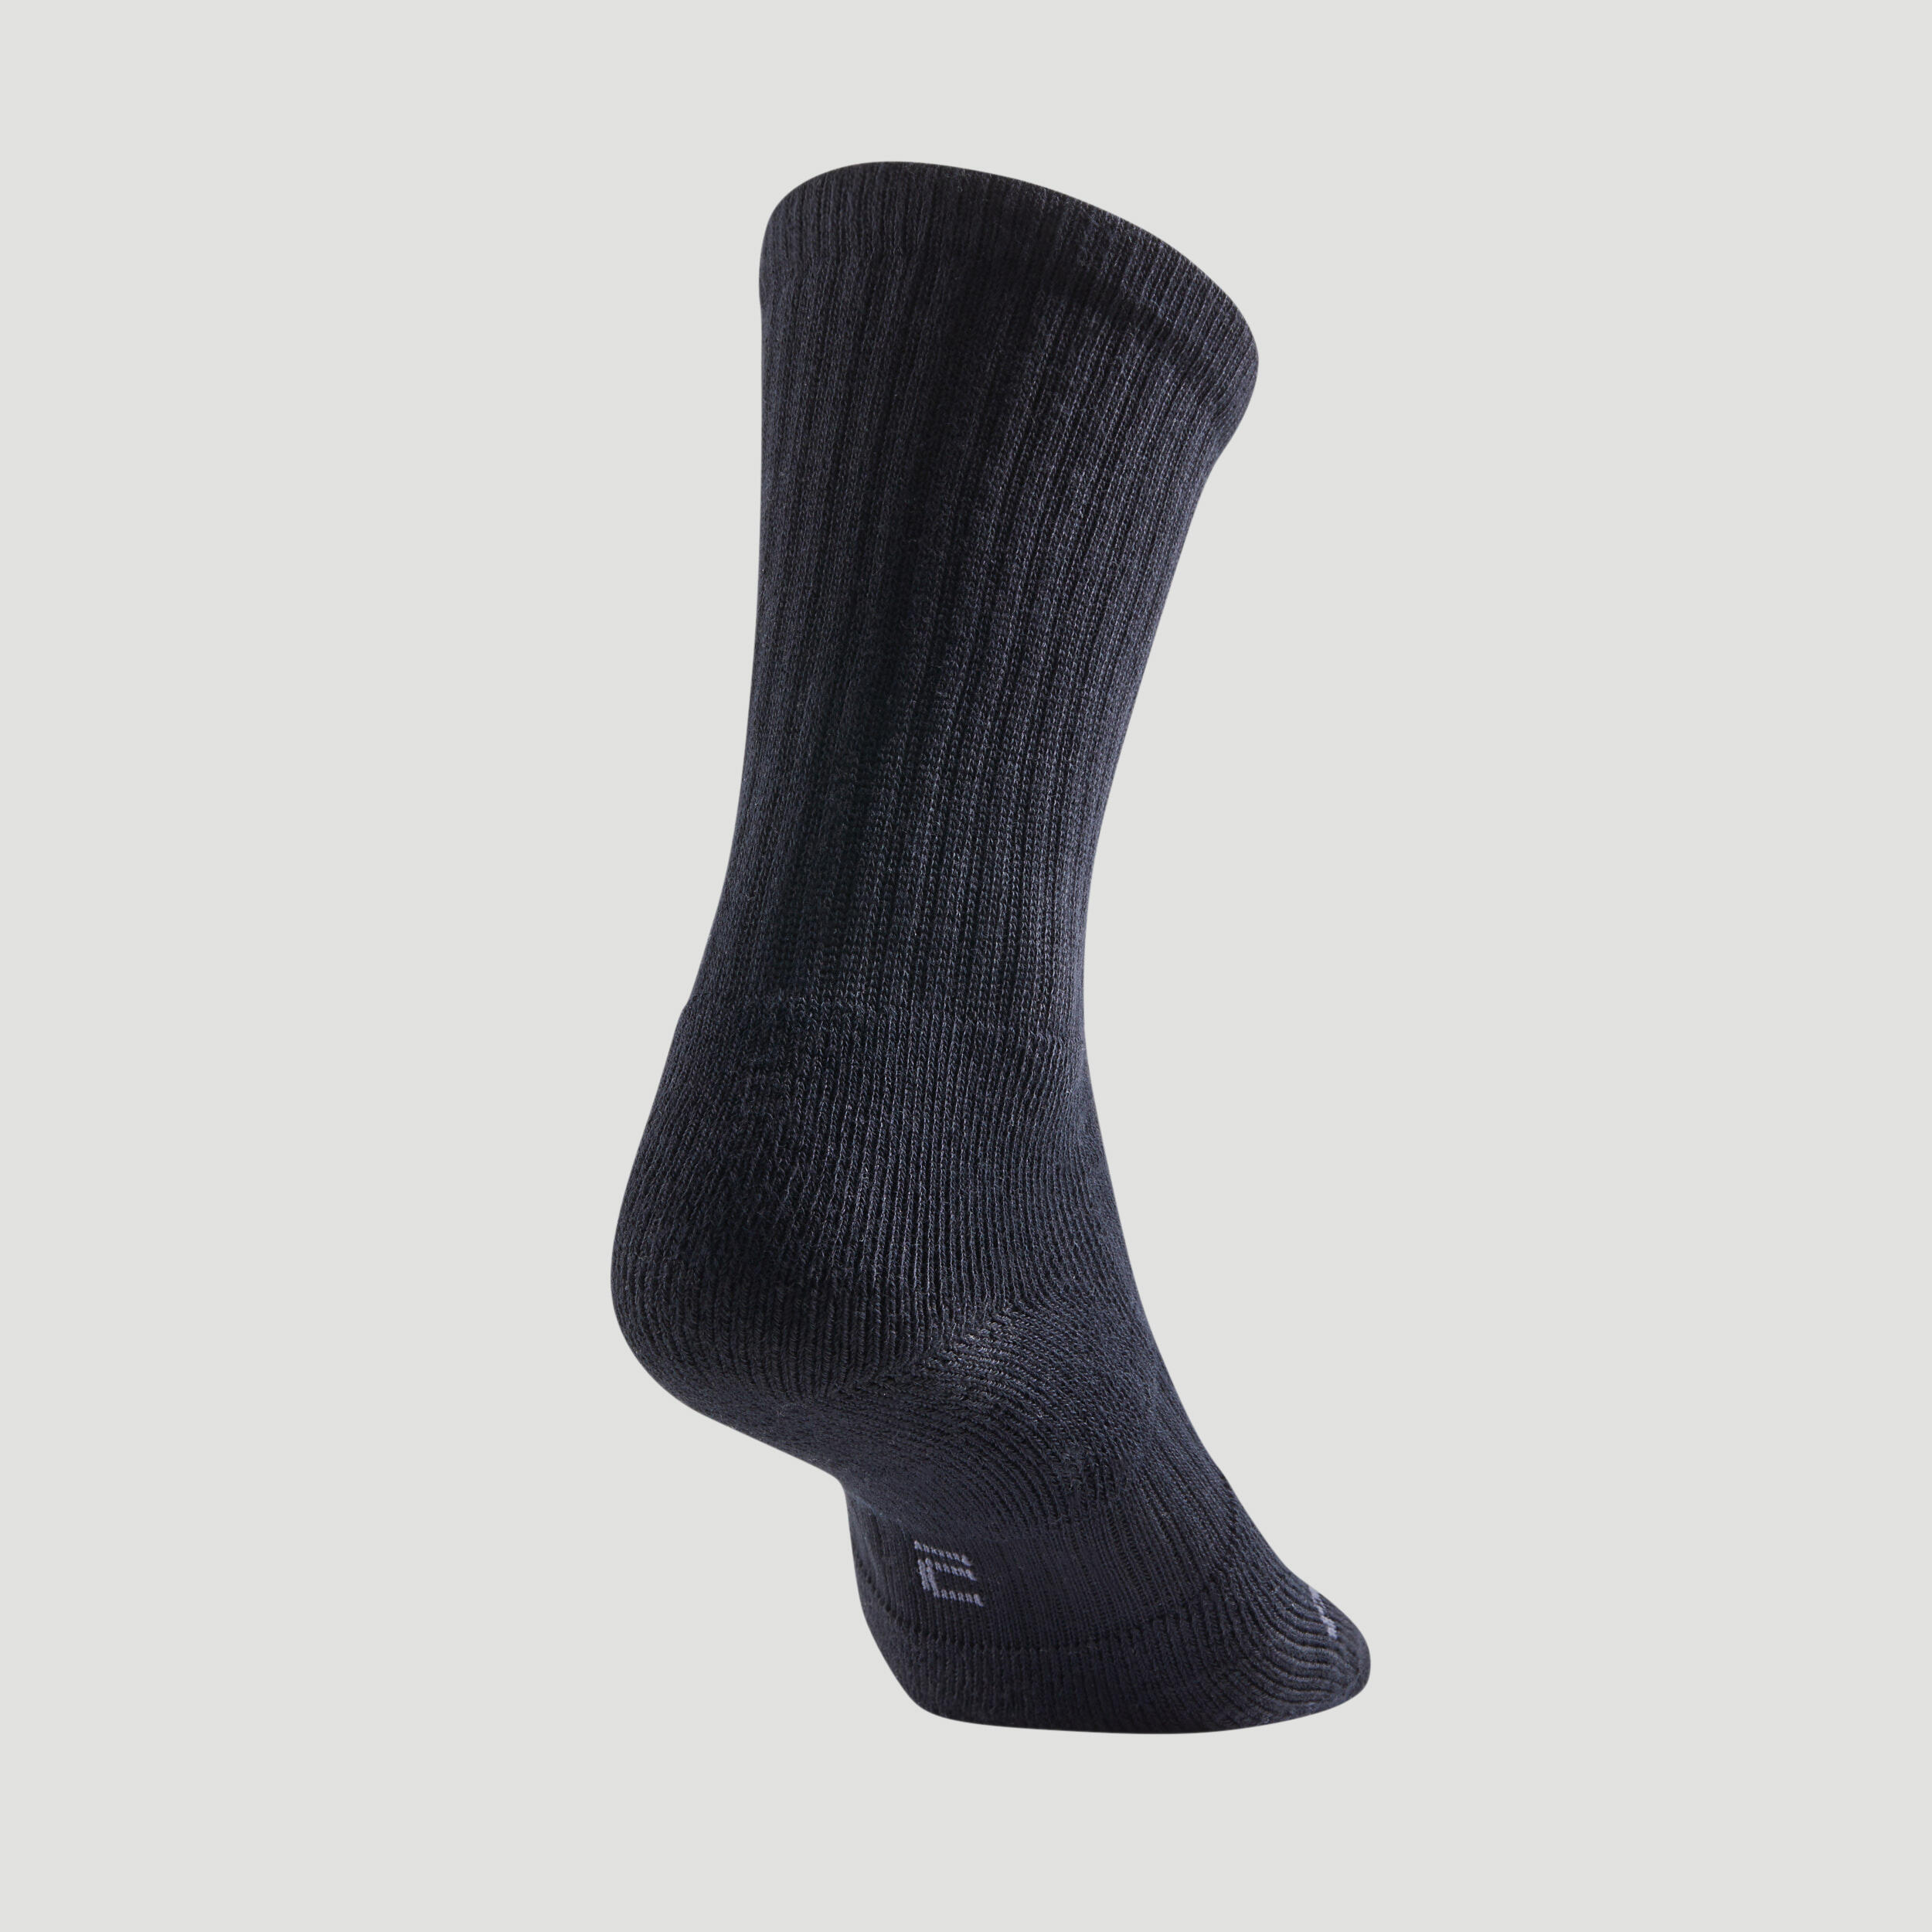 High Tennis Socks RS 500 Tri-Pack - Black 5/5